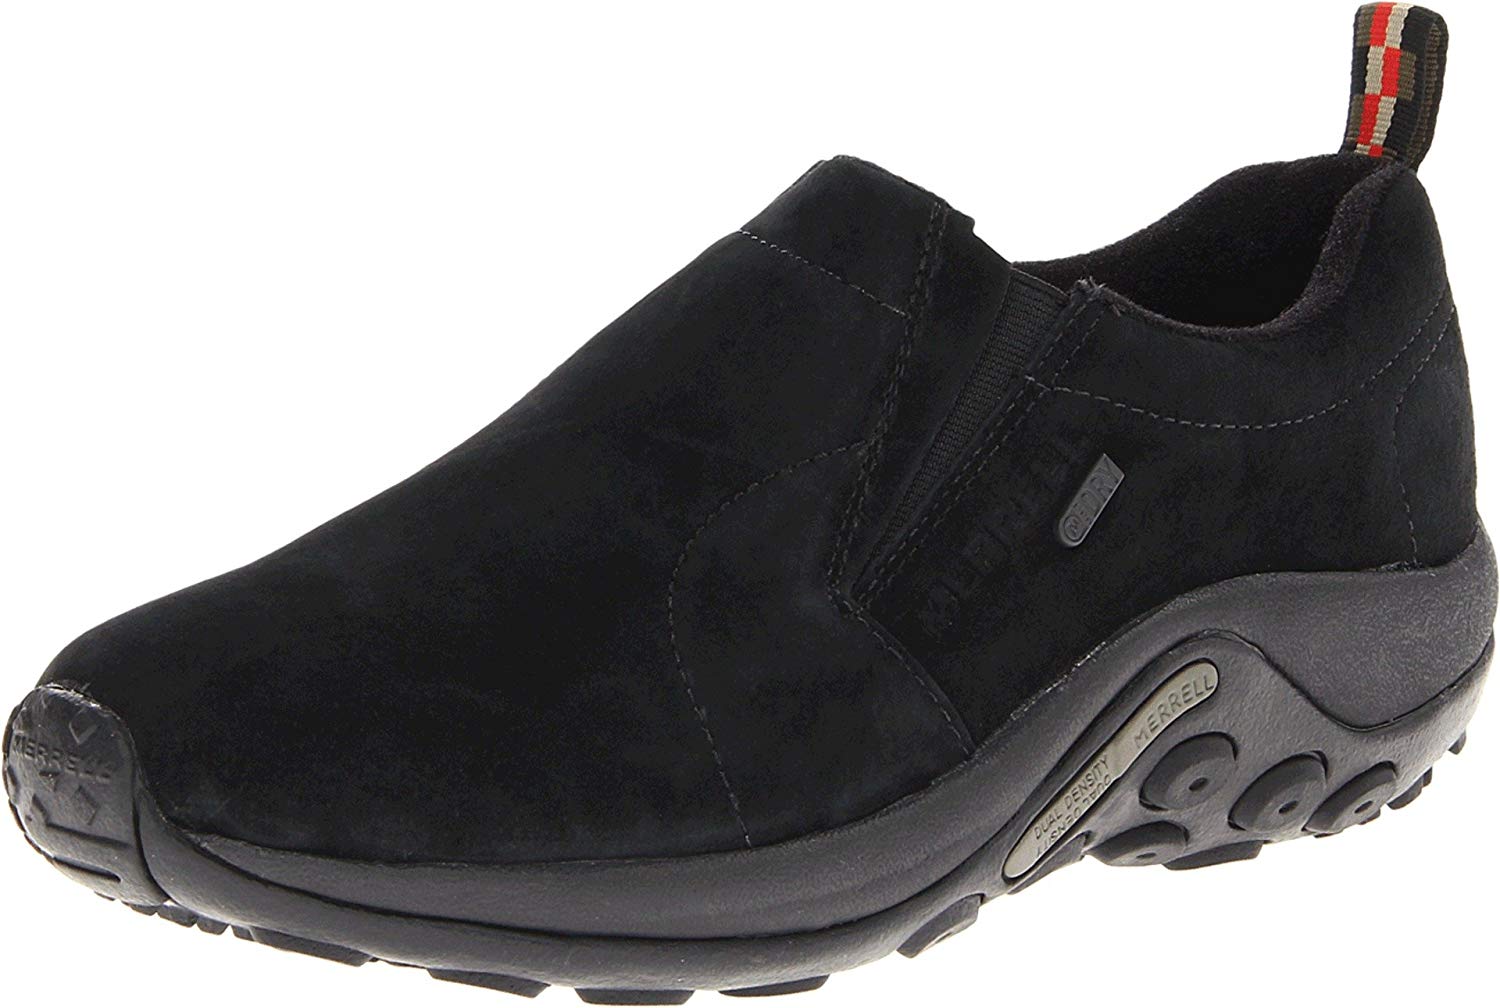 Merrell Men's Jungle Moc Waterproof Slip-On Shoe, Black, Size 7.0 9MNq ...